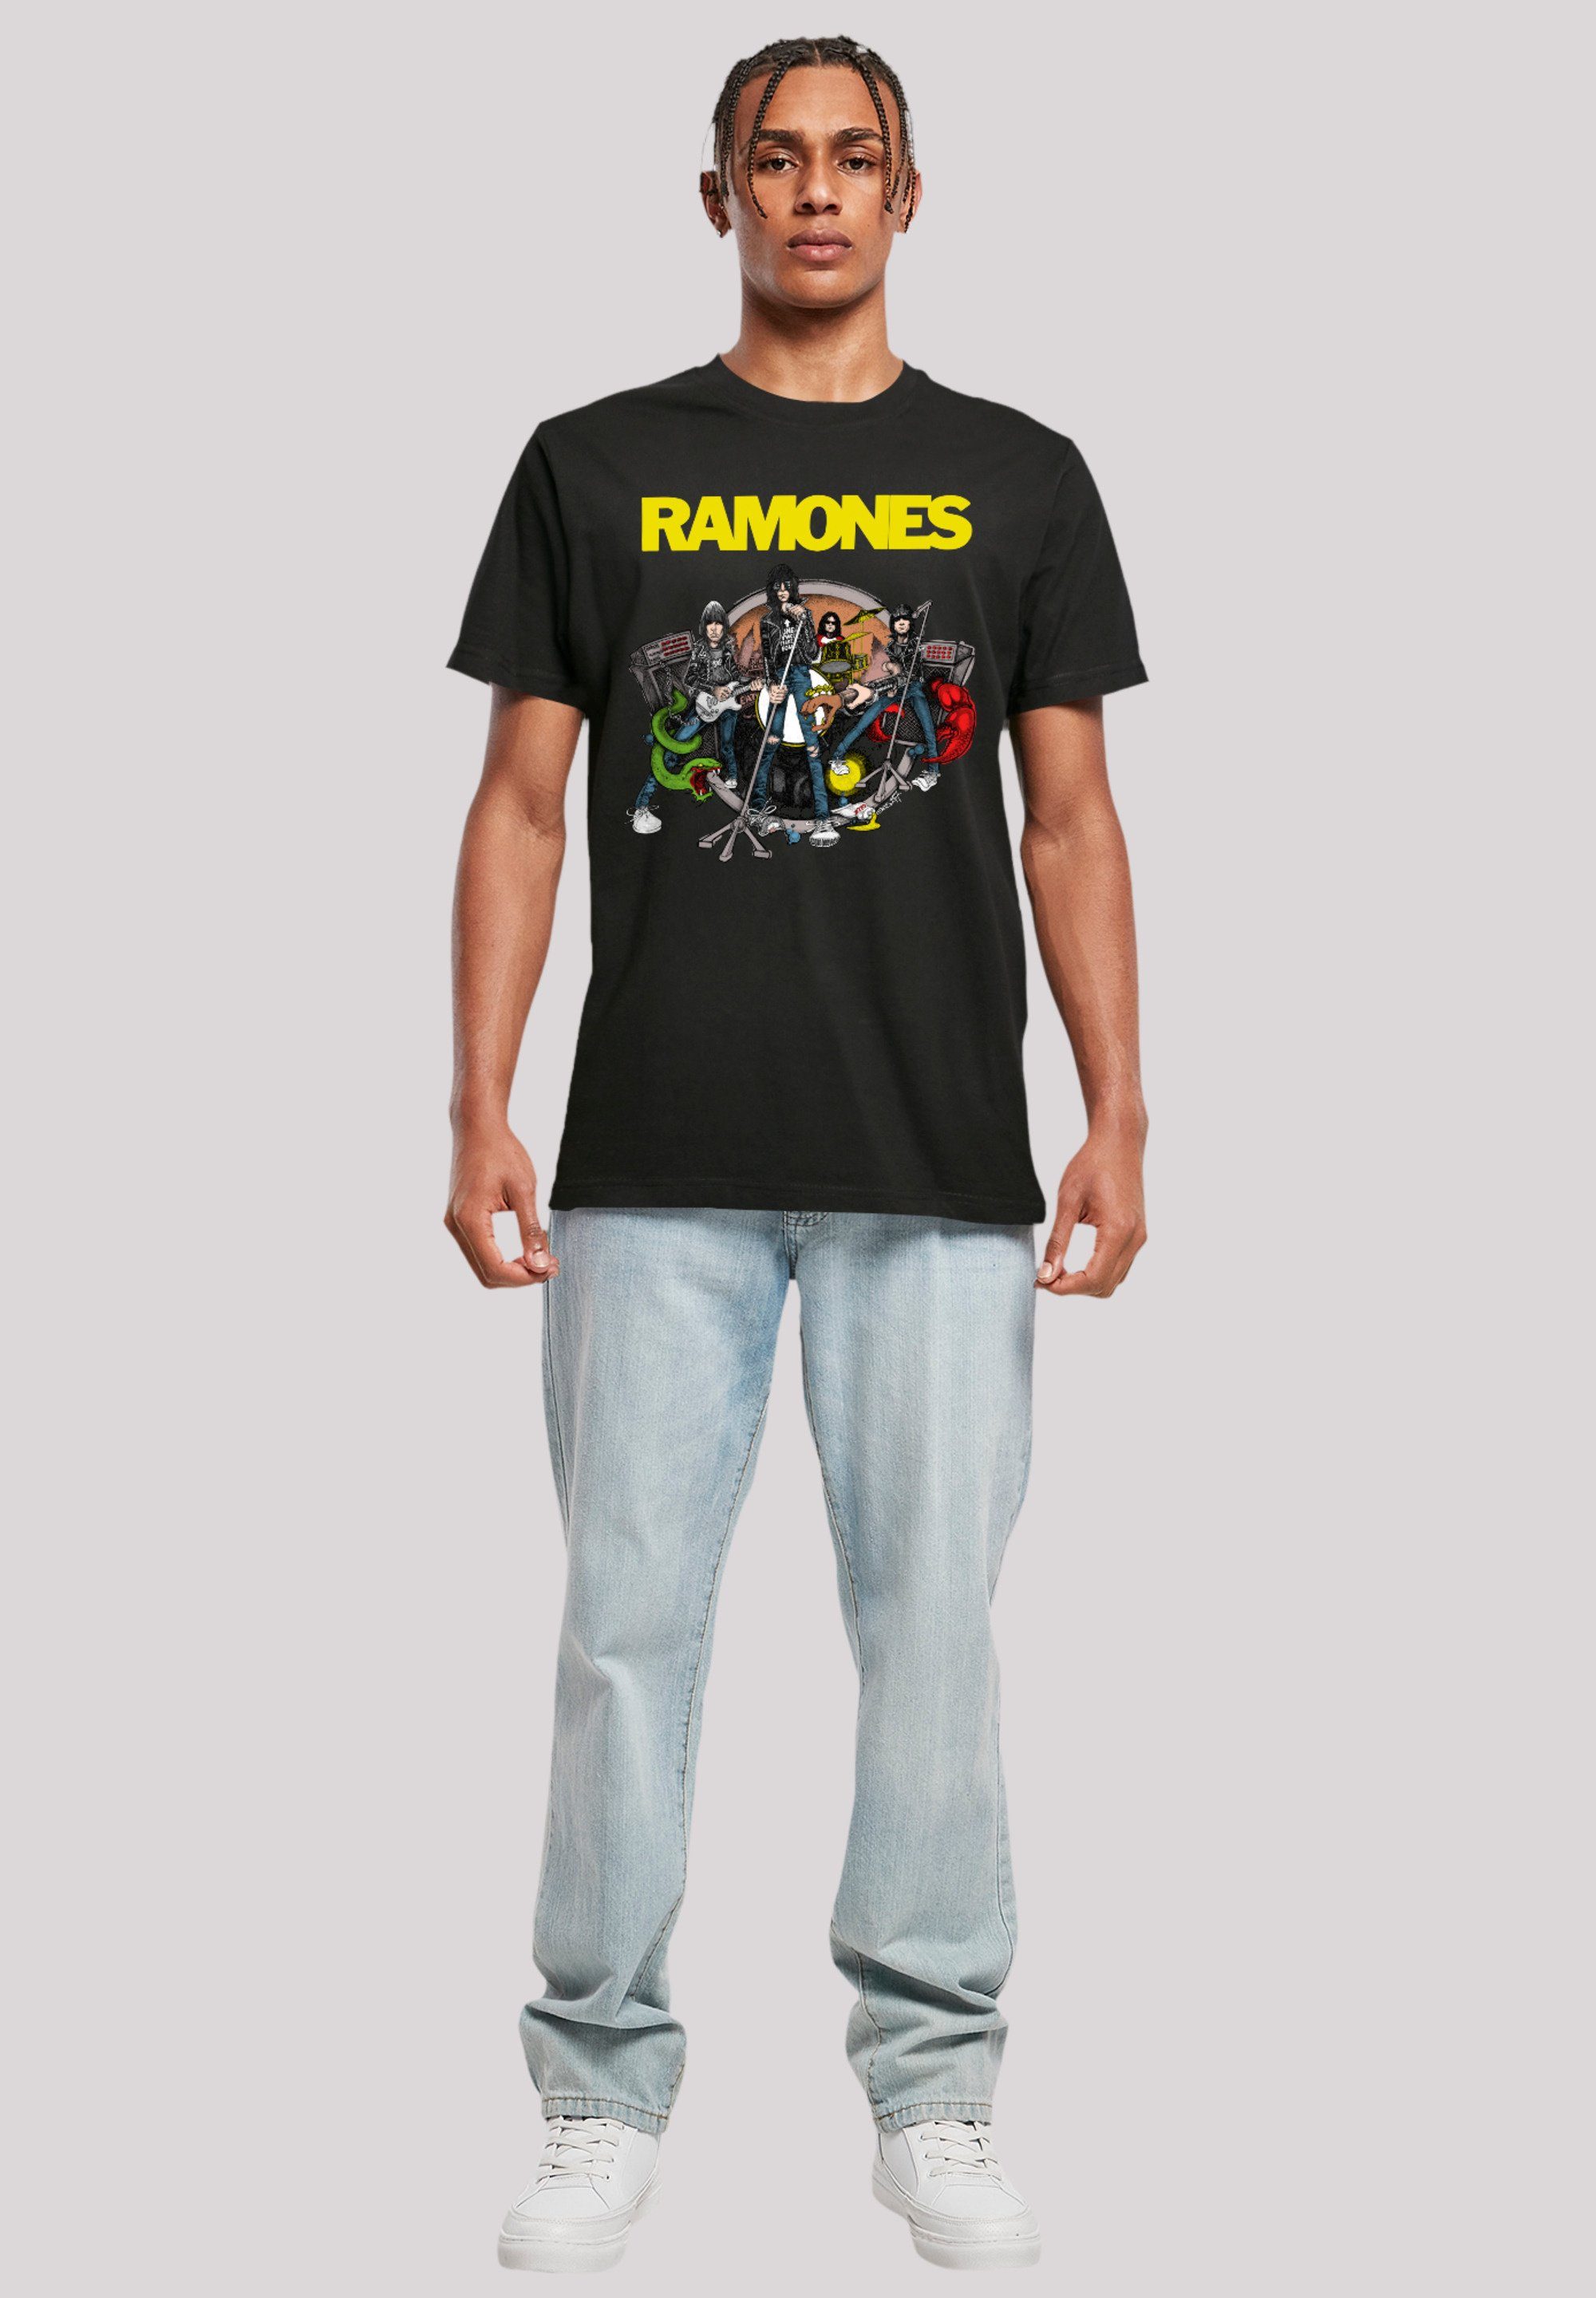 To T-Shirt Premium Ramones Road Rock Qualität, F4NT4STIC Band Band, Ruin Musik Rock-Musik